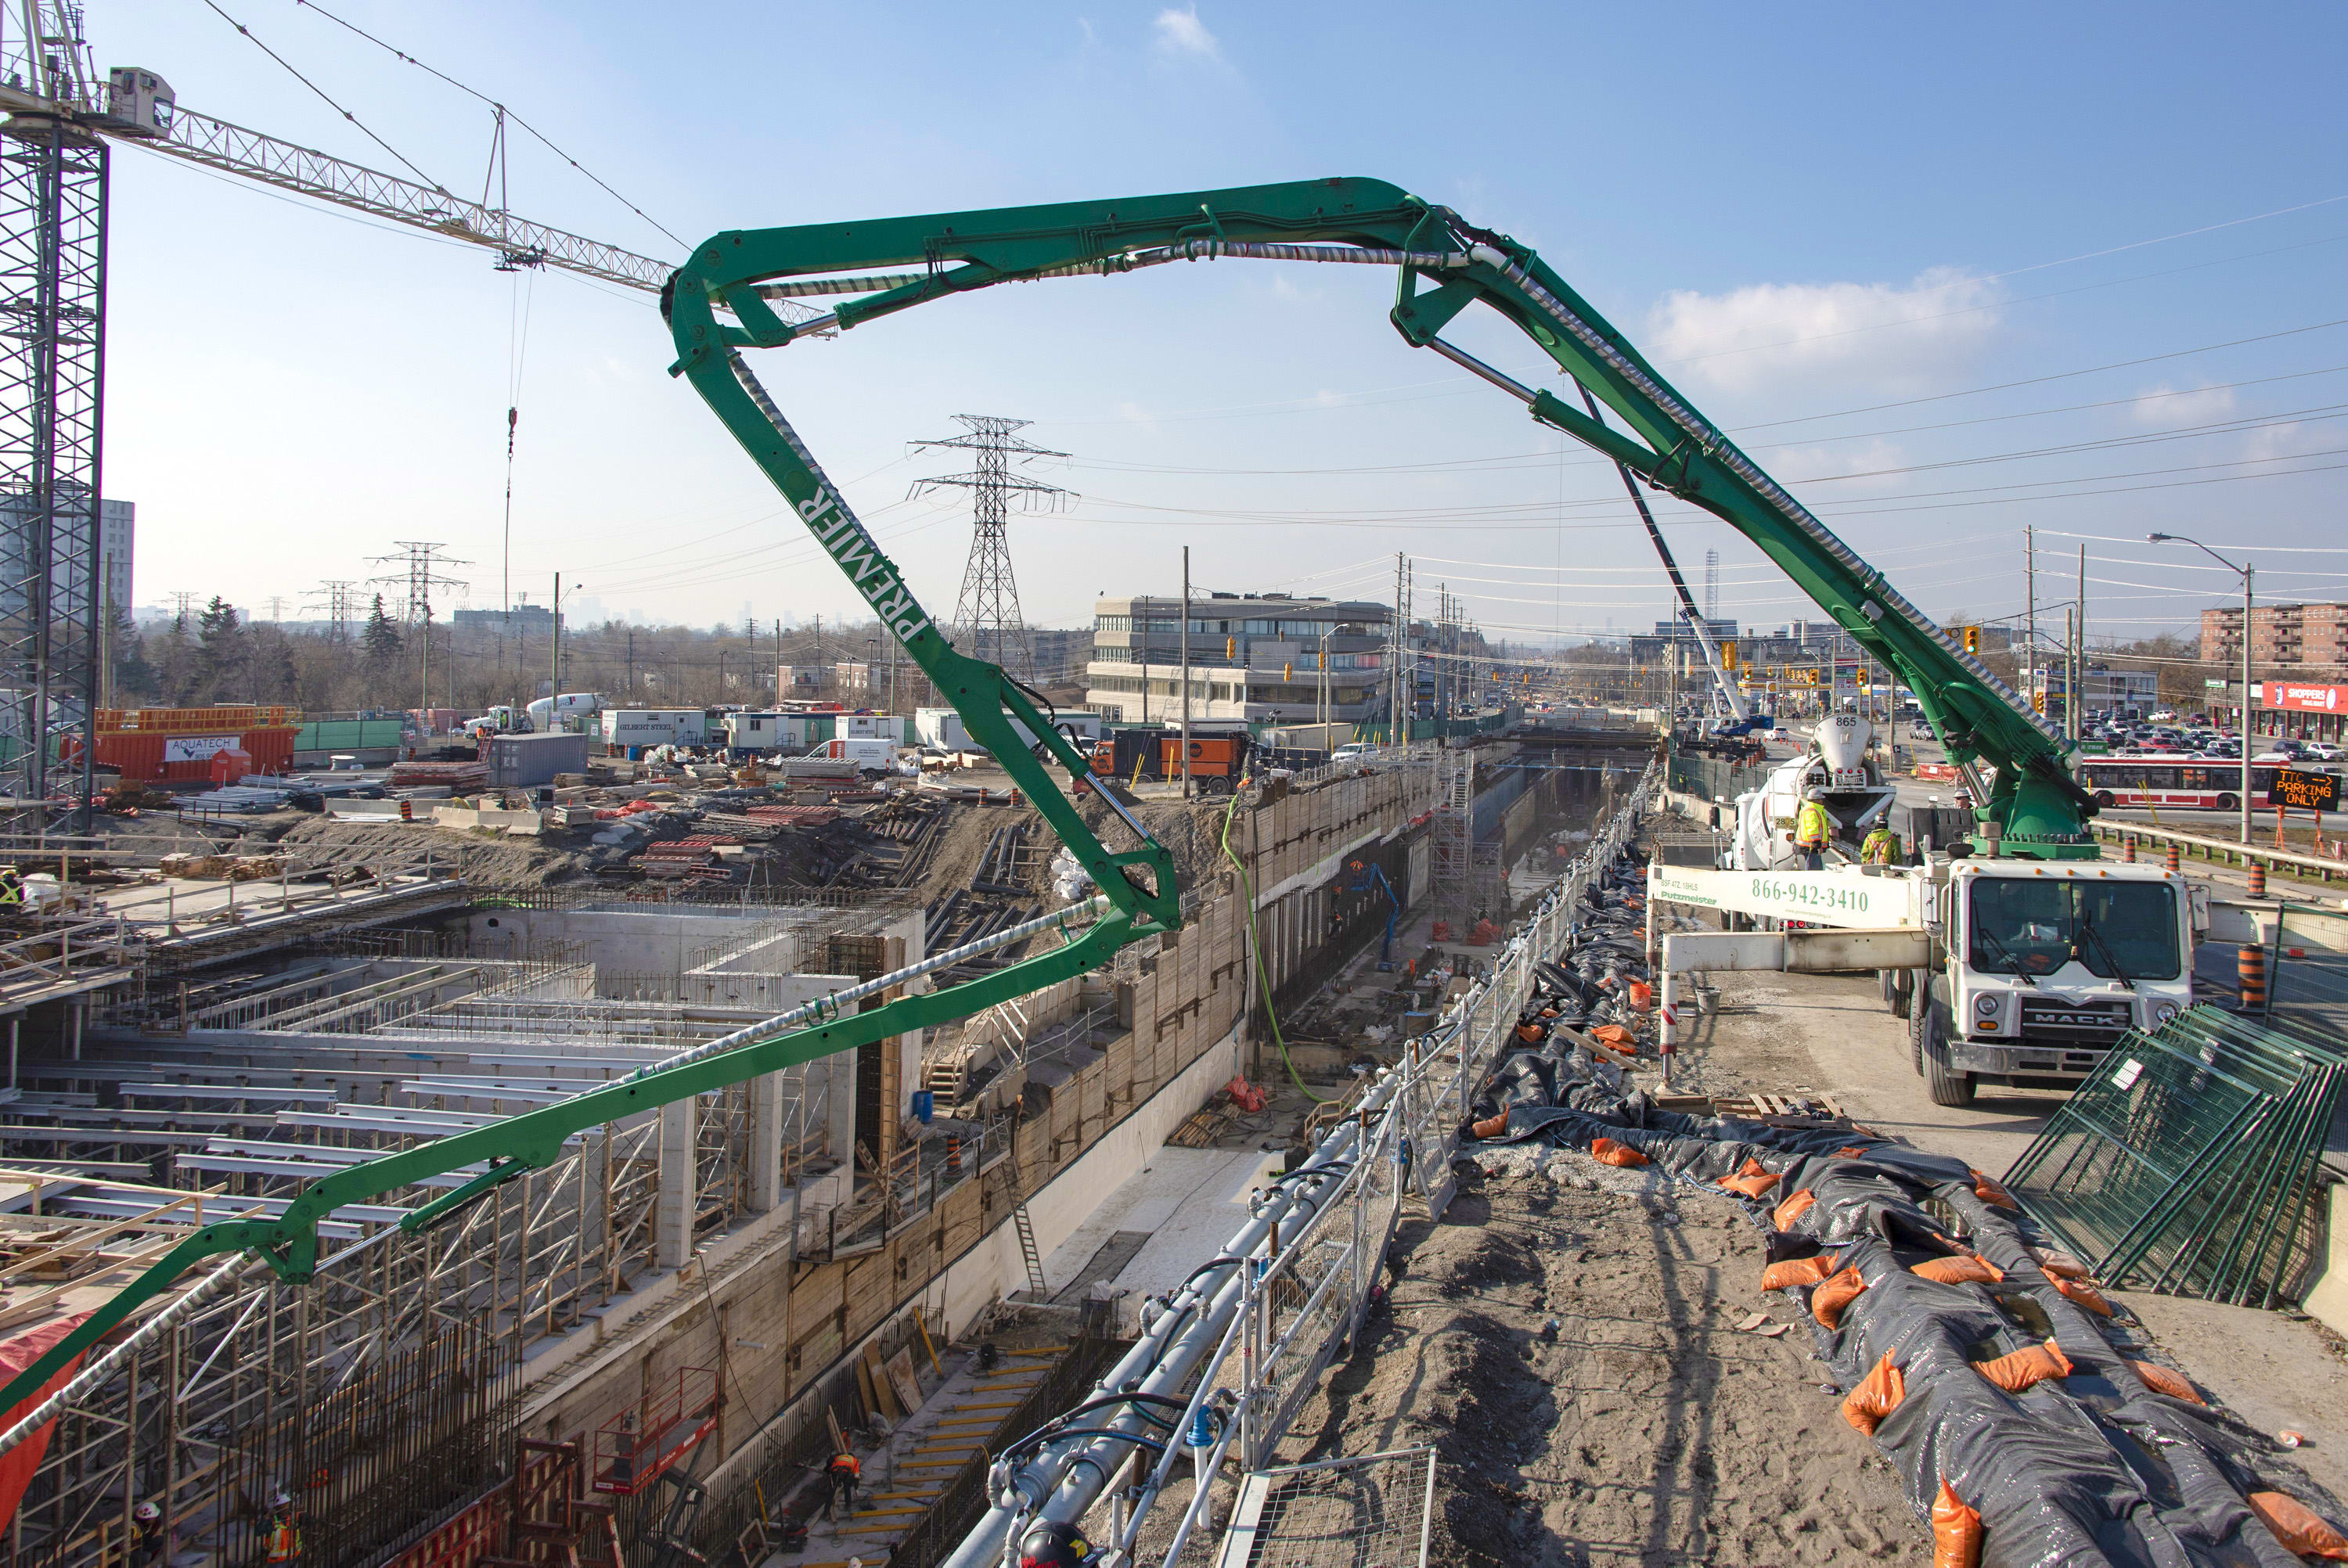 A very long crane reaches far to deliver concrete at a job site.